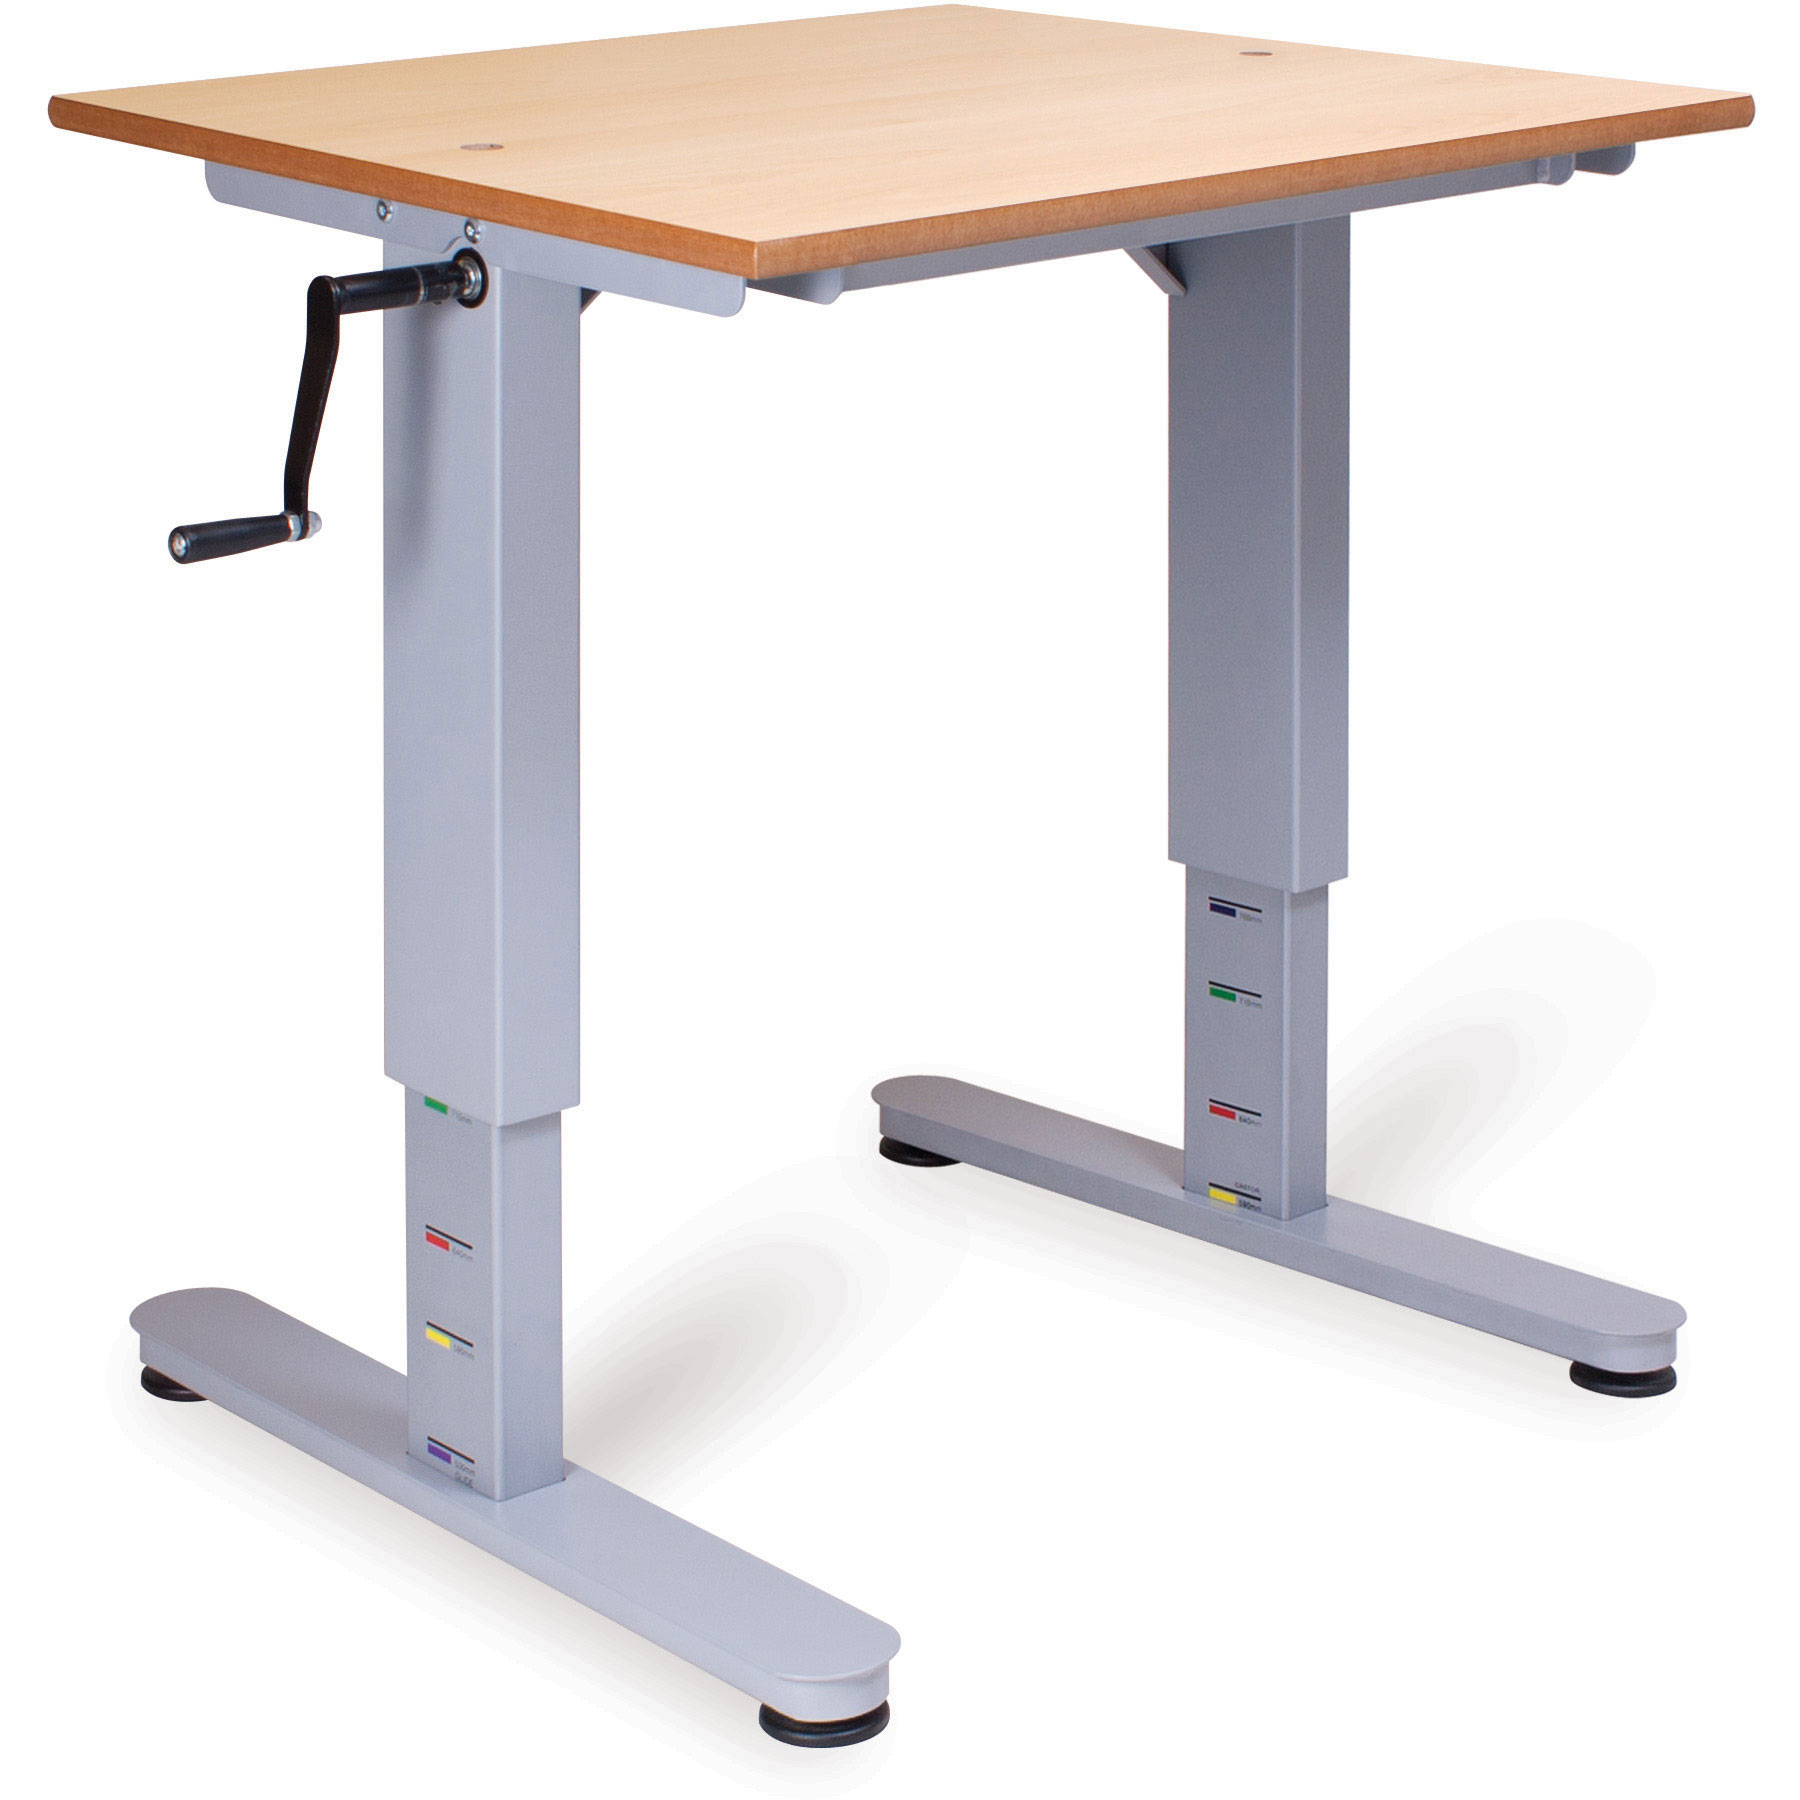 Adjustable Height School Tables